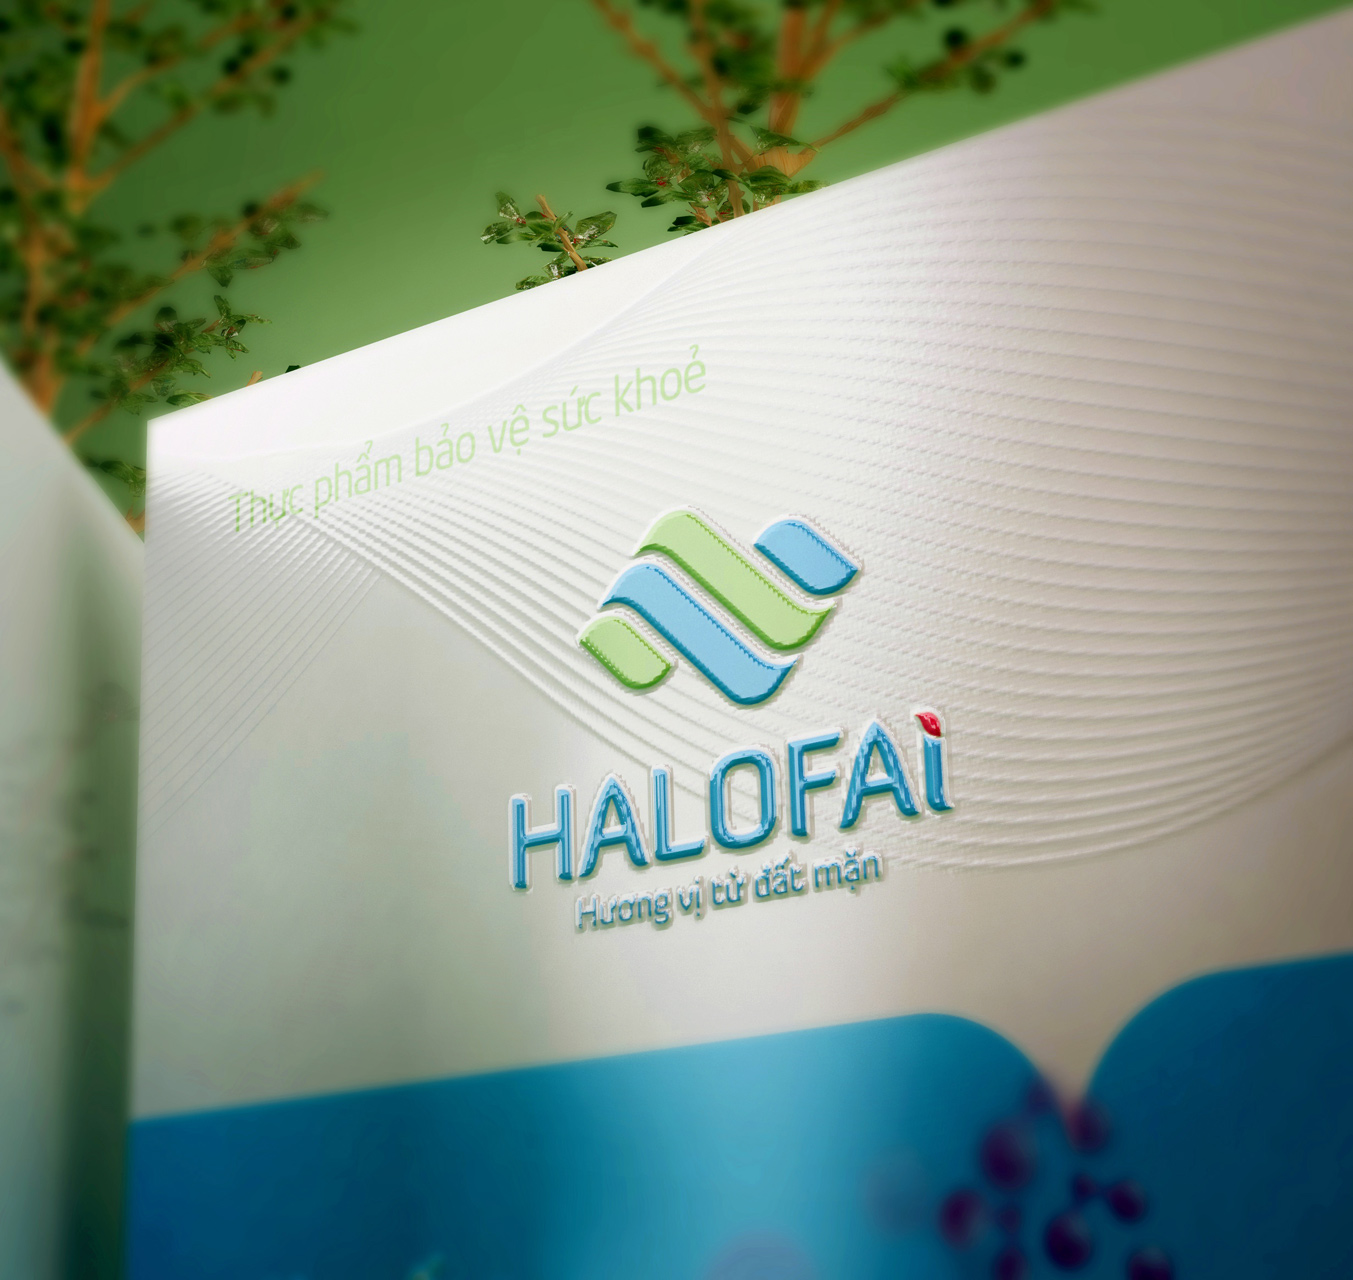 Halofai Packaging Design